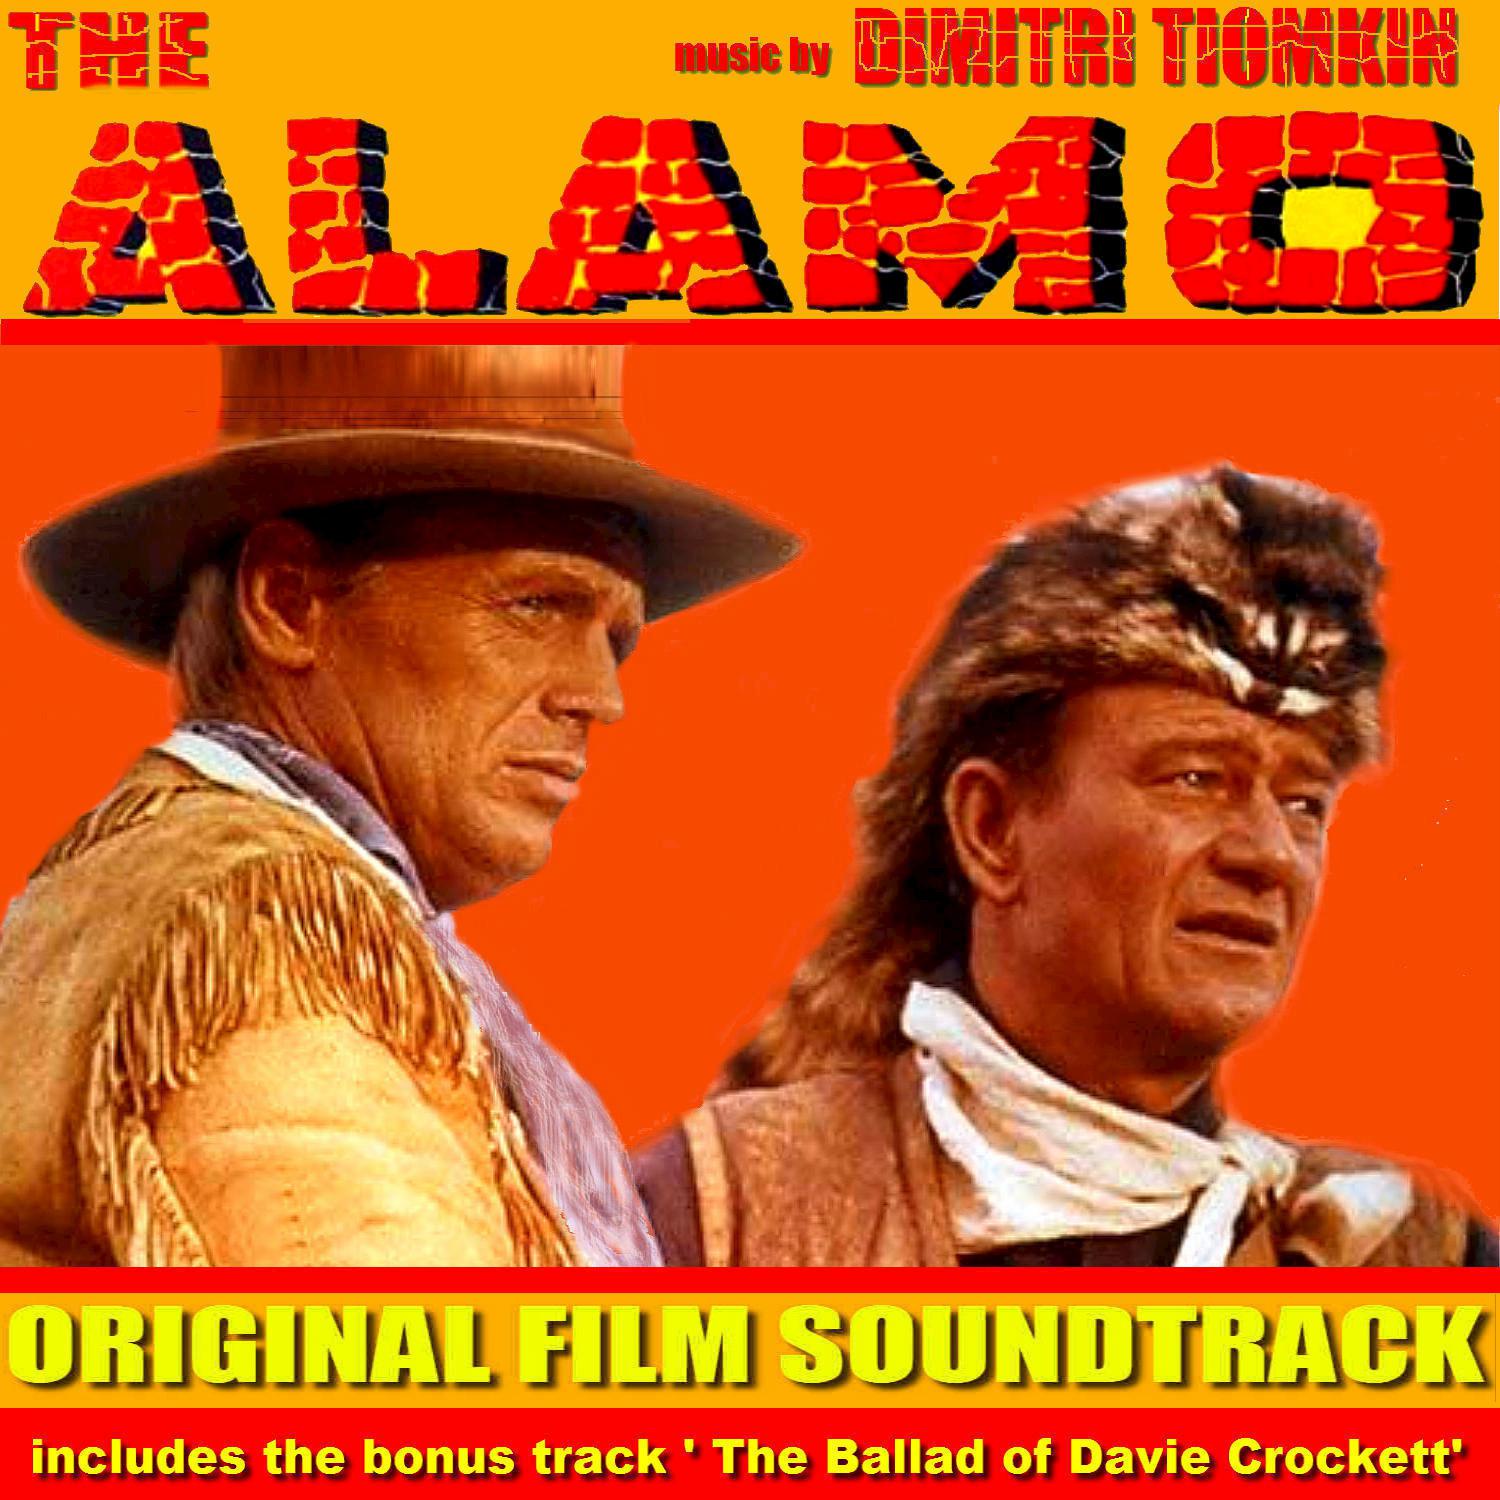 Ballad of the Alamo (From "The Alamo")